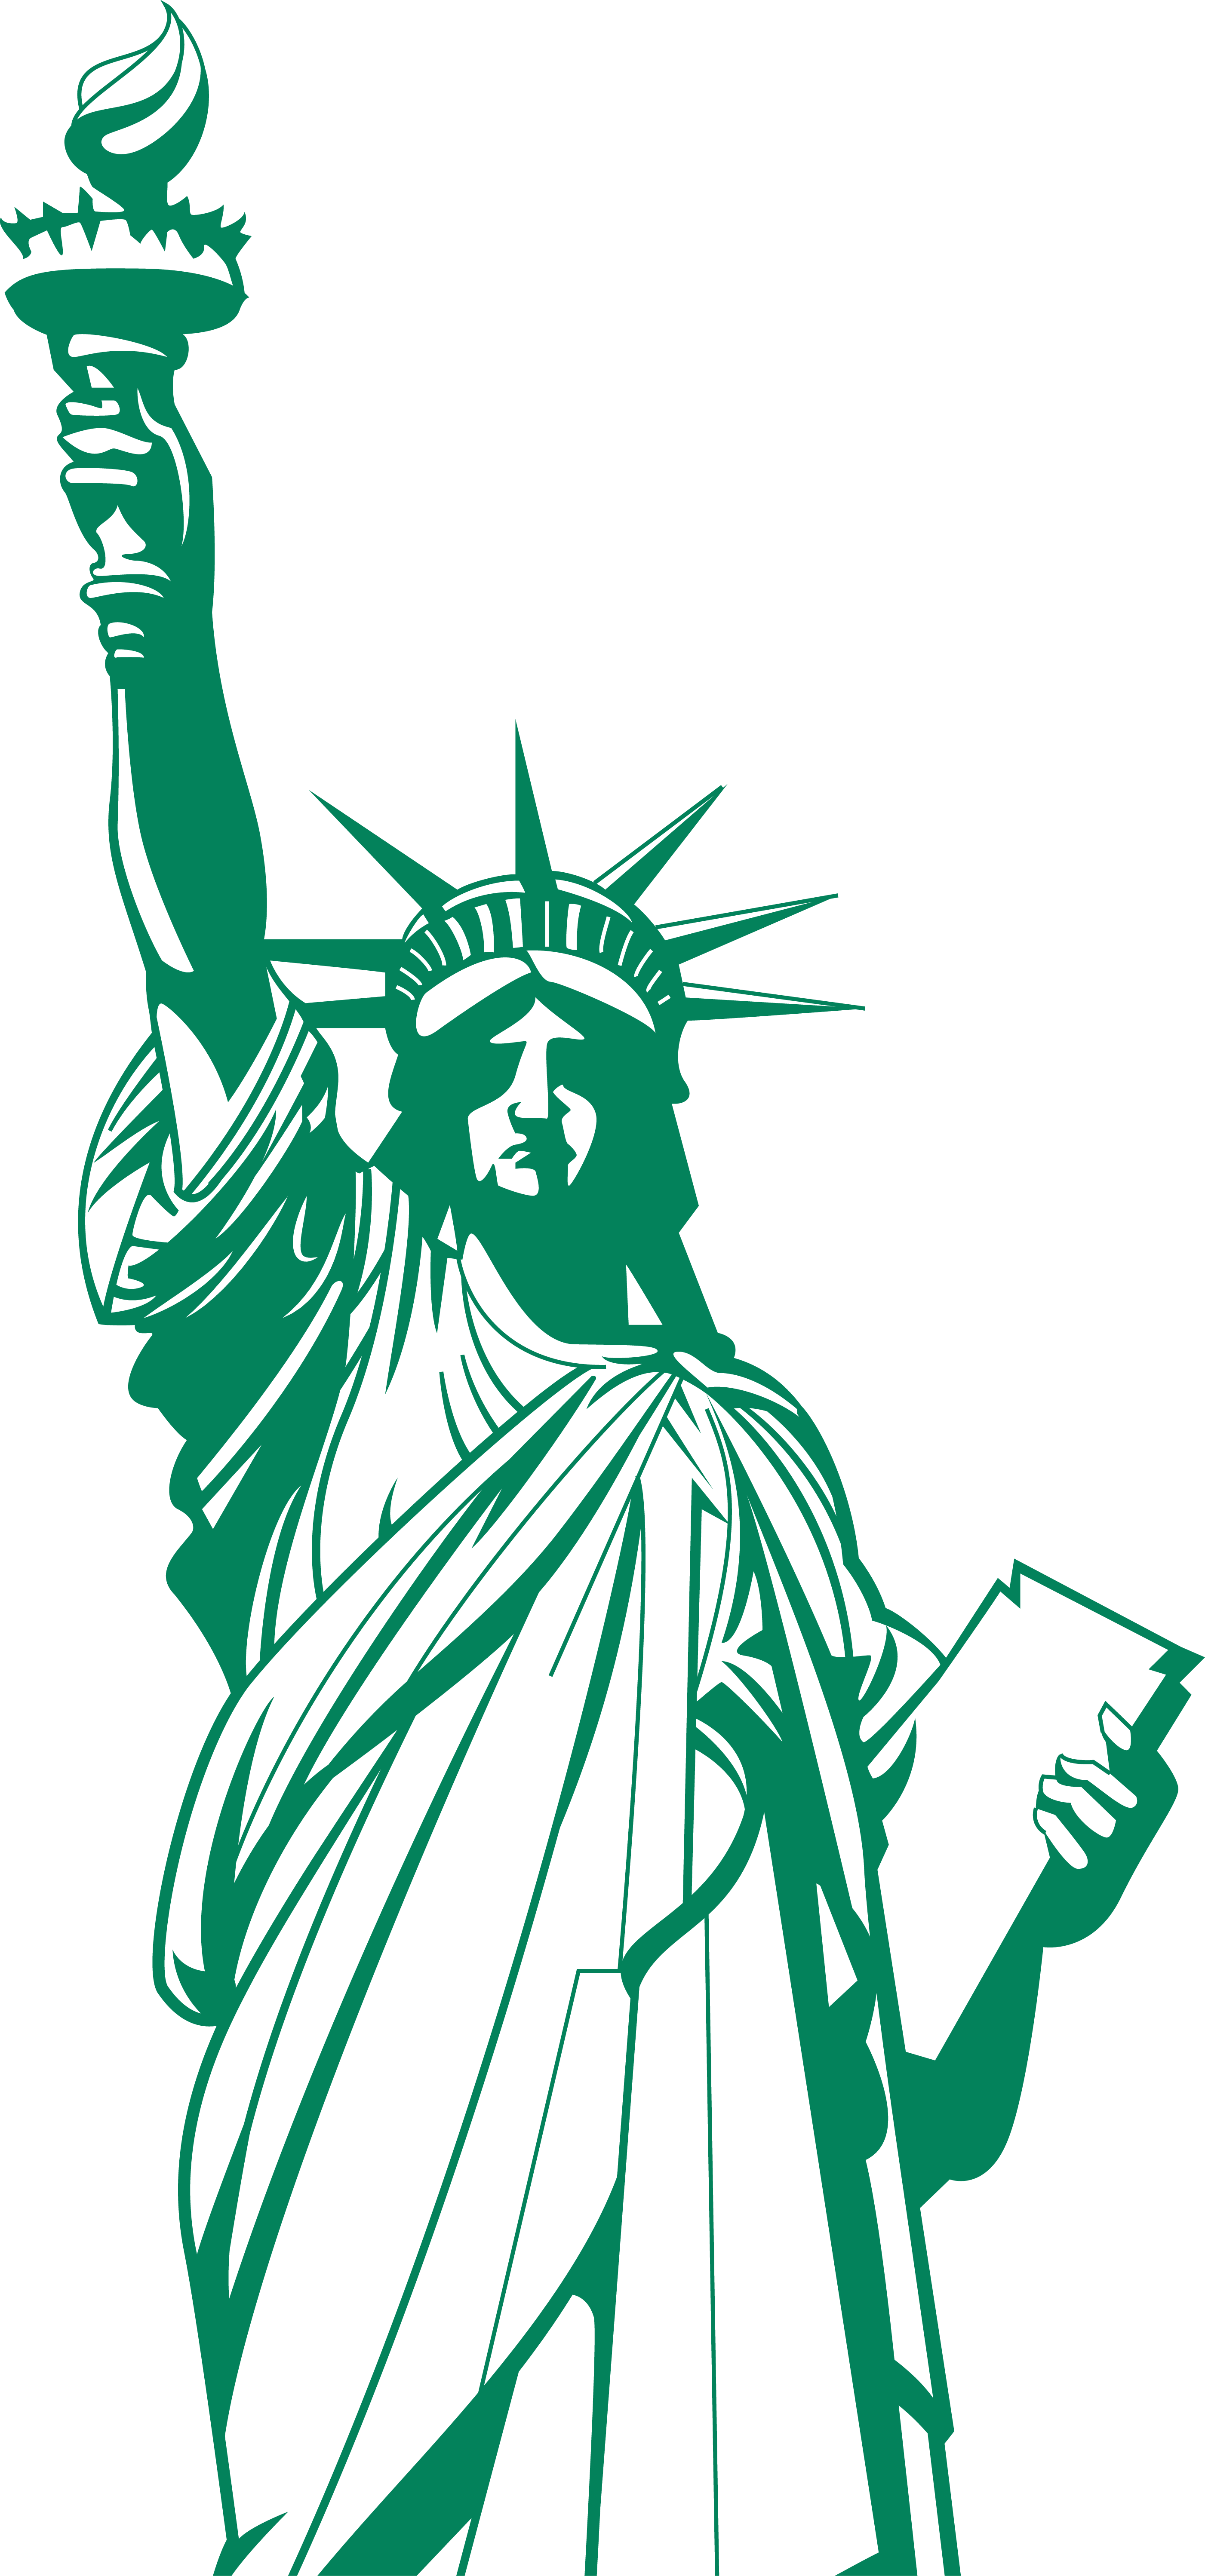 statue of liberty, logo image download oiac #21220